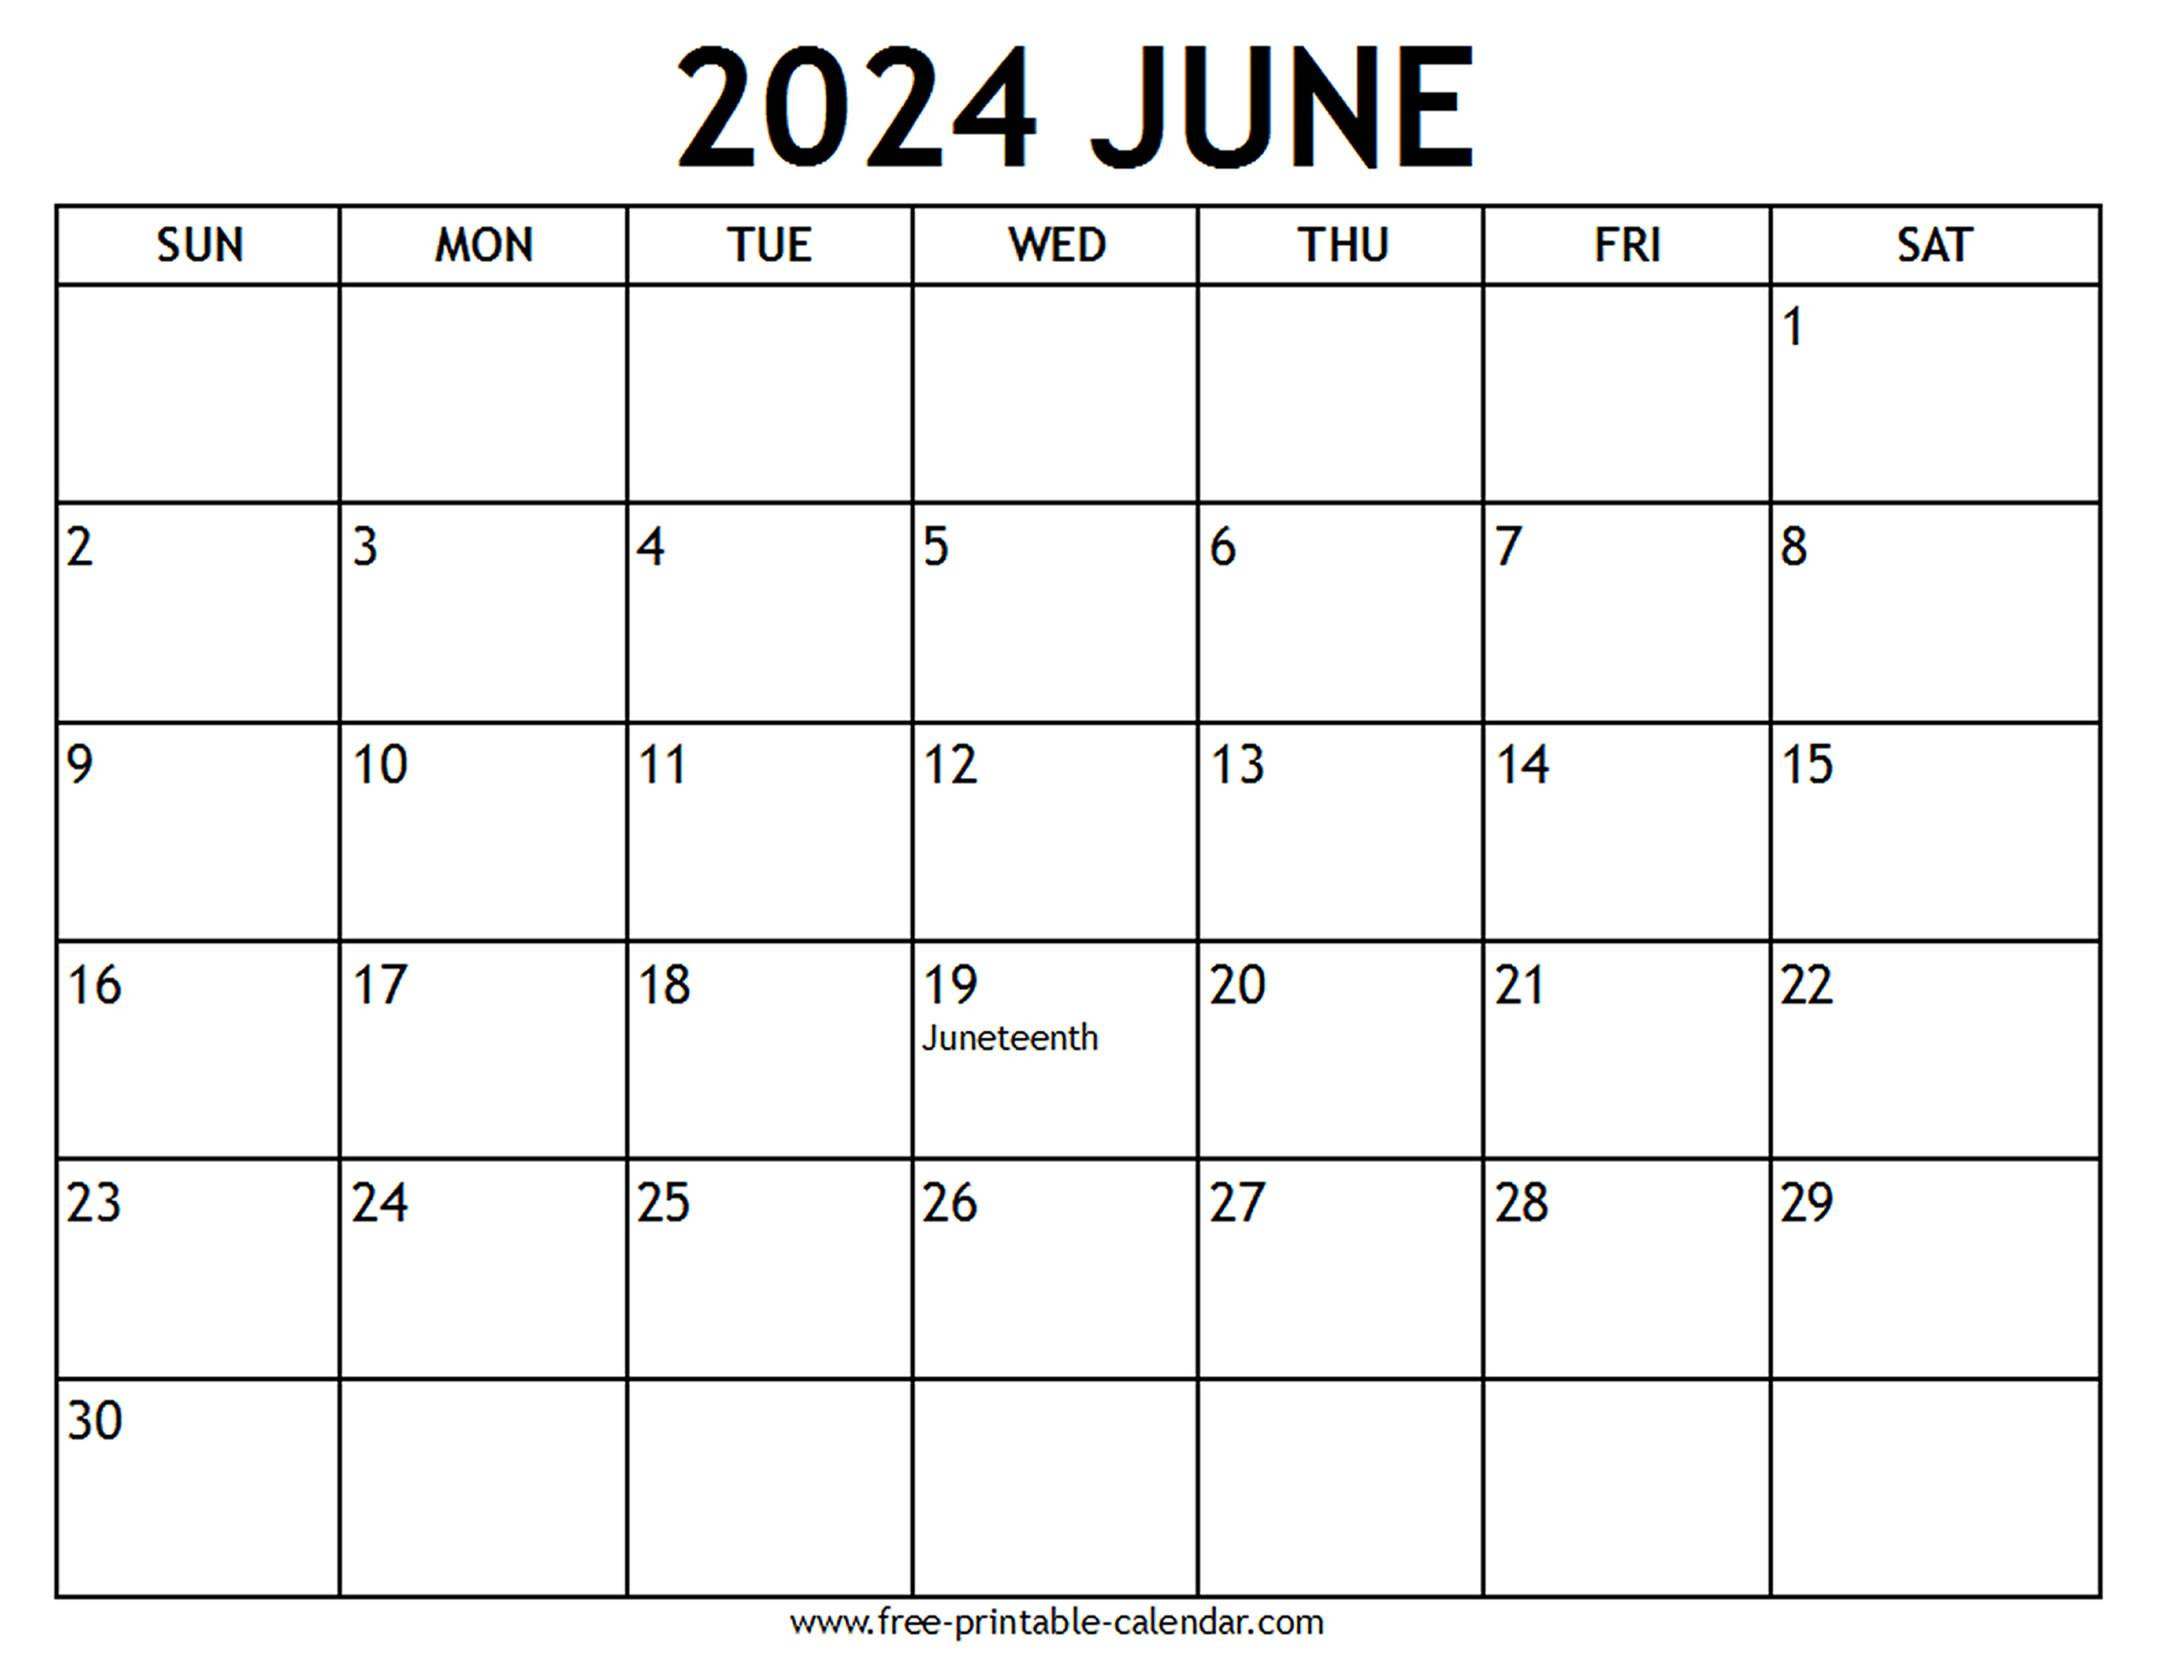 June 2024 Calendar Us Holidays - Free-Printable-Calendar regarding June Calendar 2024 Holidays